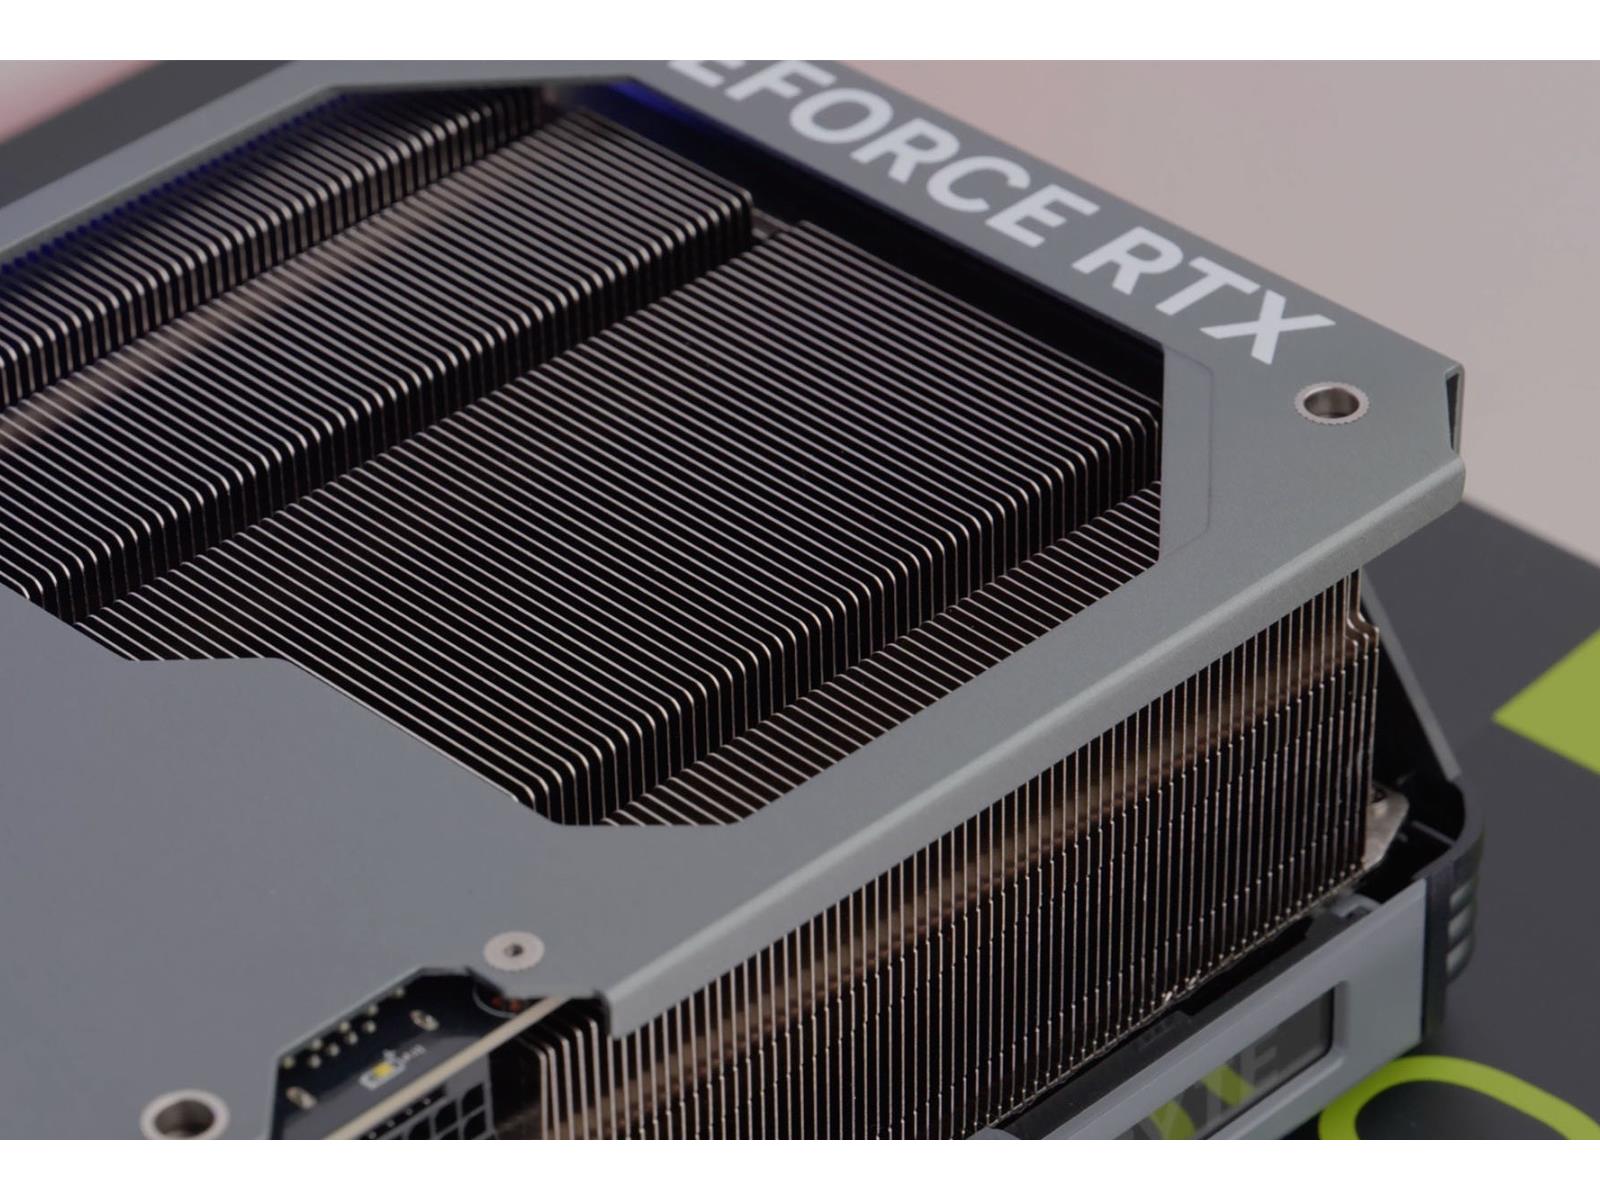 Nvidia GeForce RTX 4080 Super Rumored to Feature 20GB VRAM